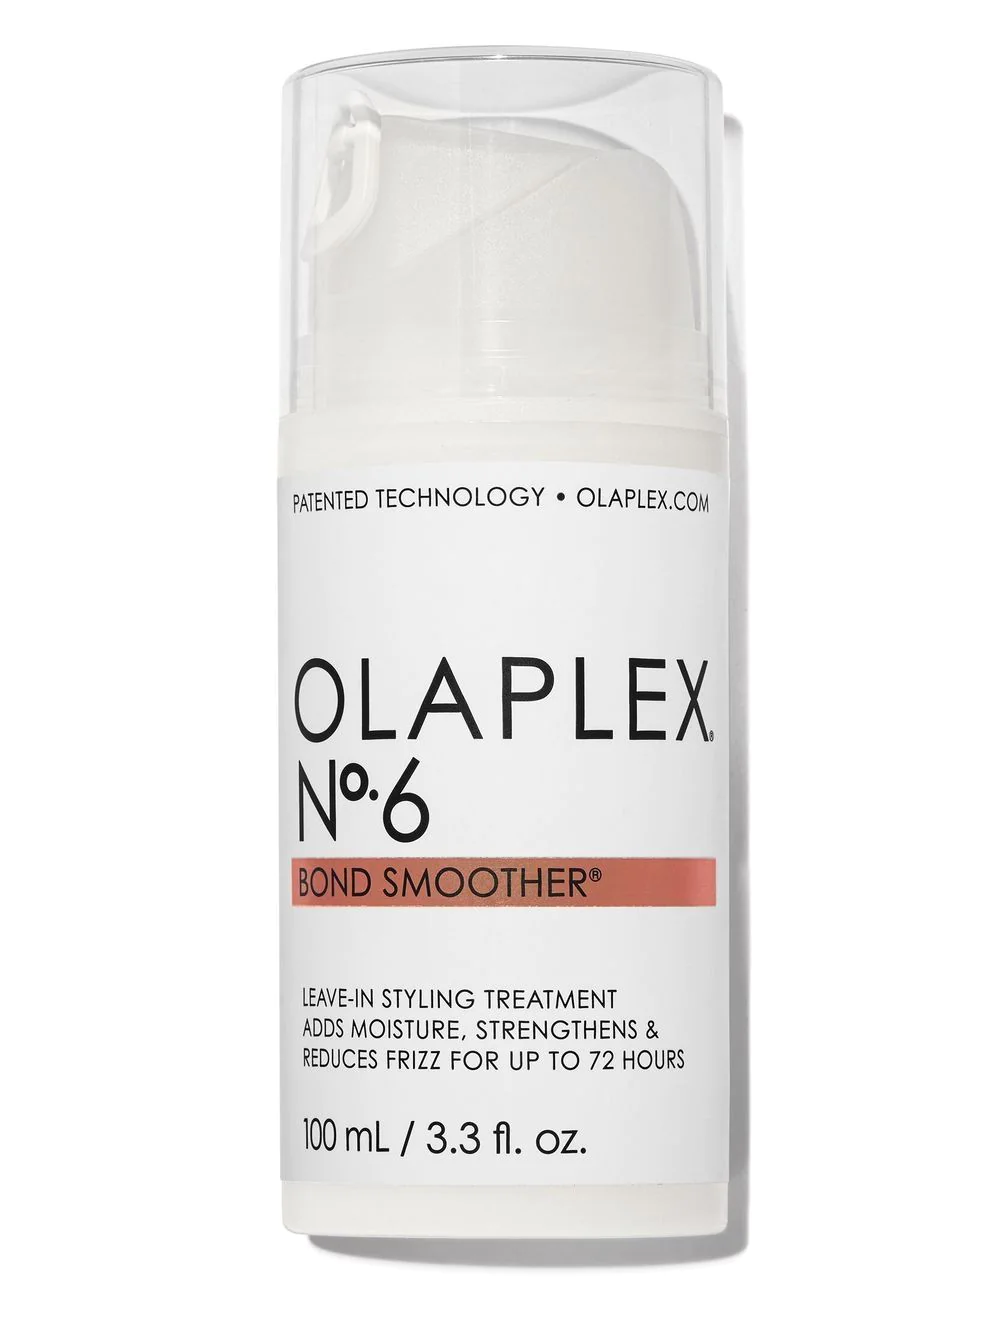 Olaplex
Nº.6 Bond Smoother styling cream